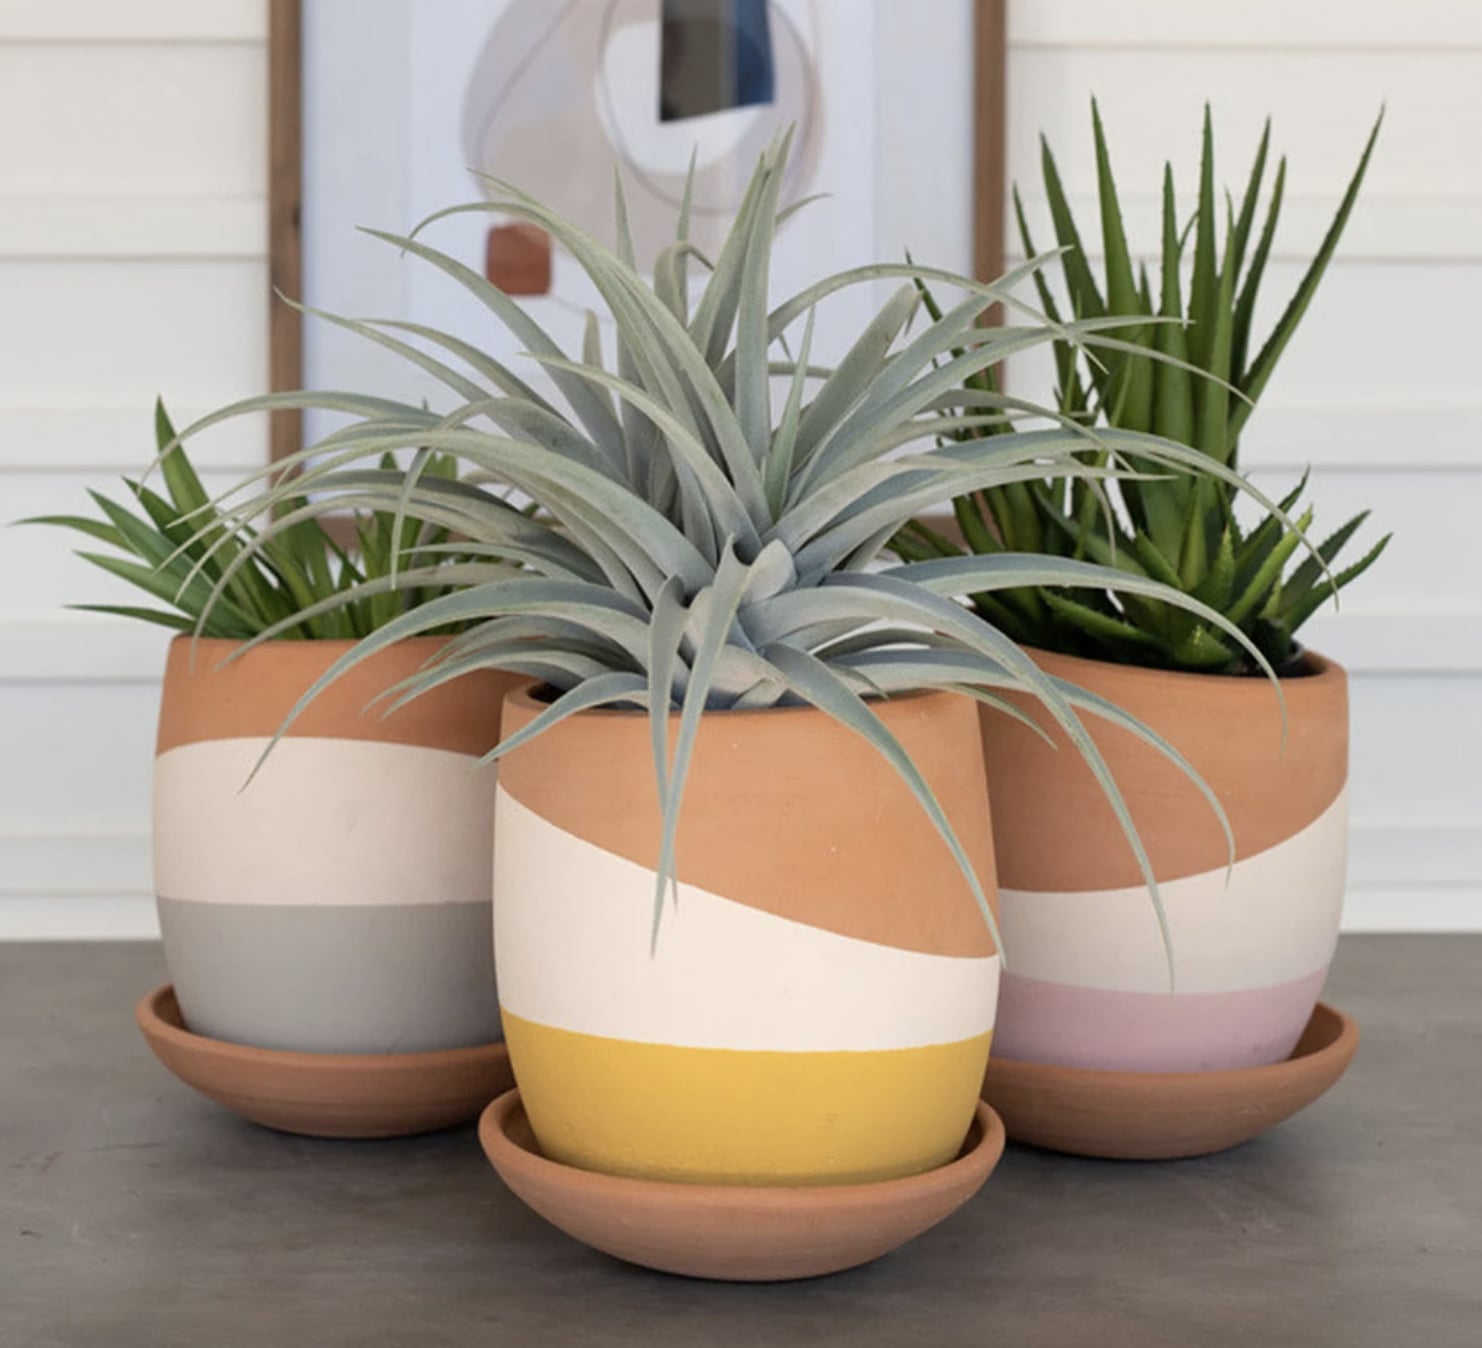 Details about   Plant Pots With Saucers Sahara Flowerpot Garden Flower Planters Indoor 